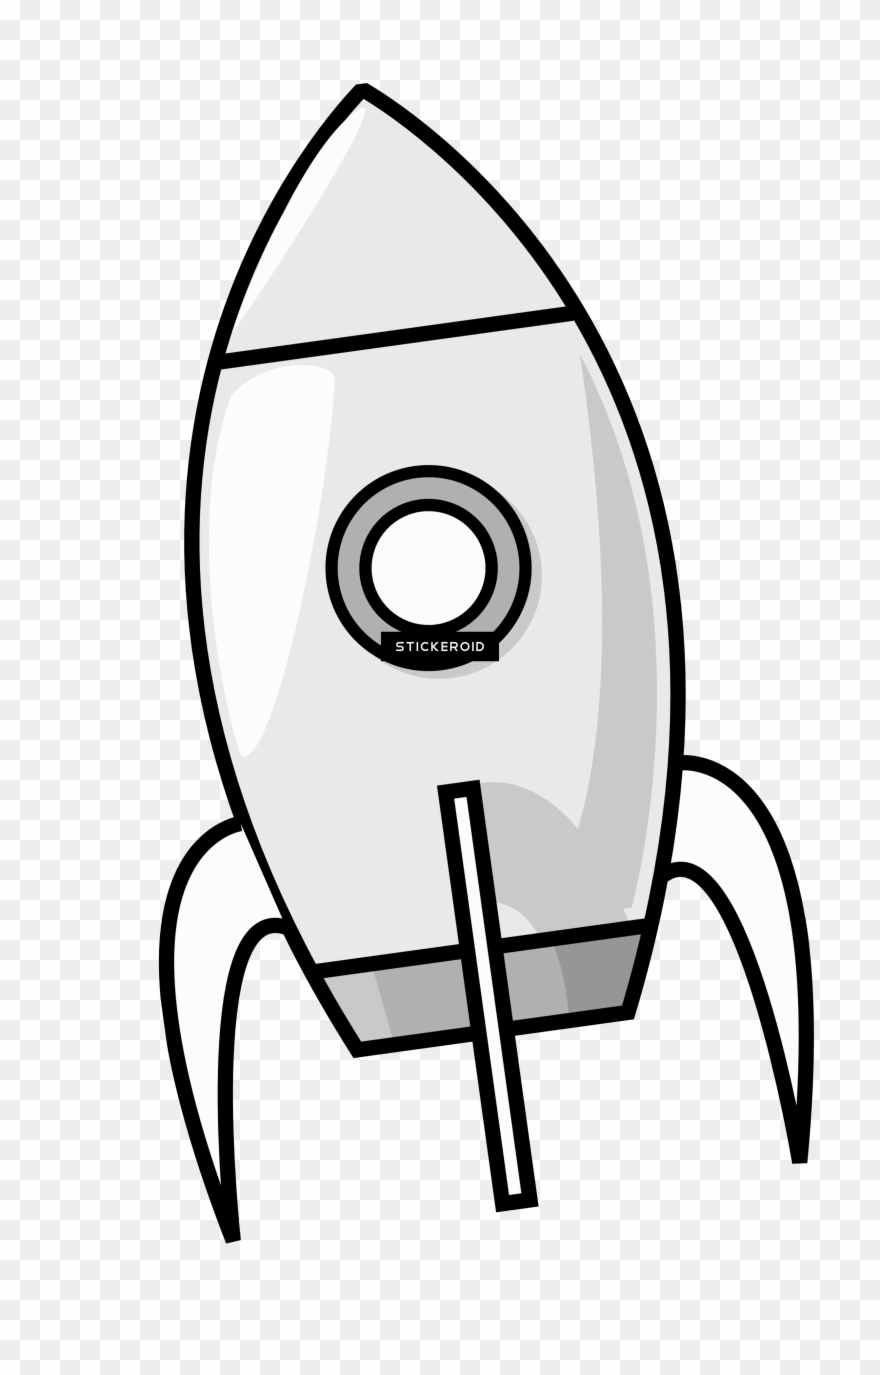 Spaceship clipart buzz. Space pinclipart 